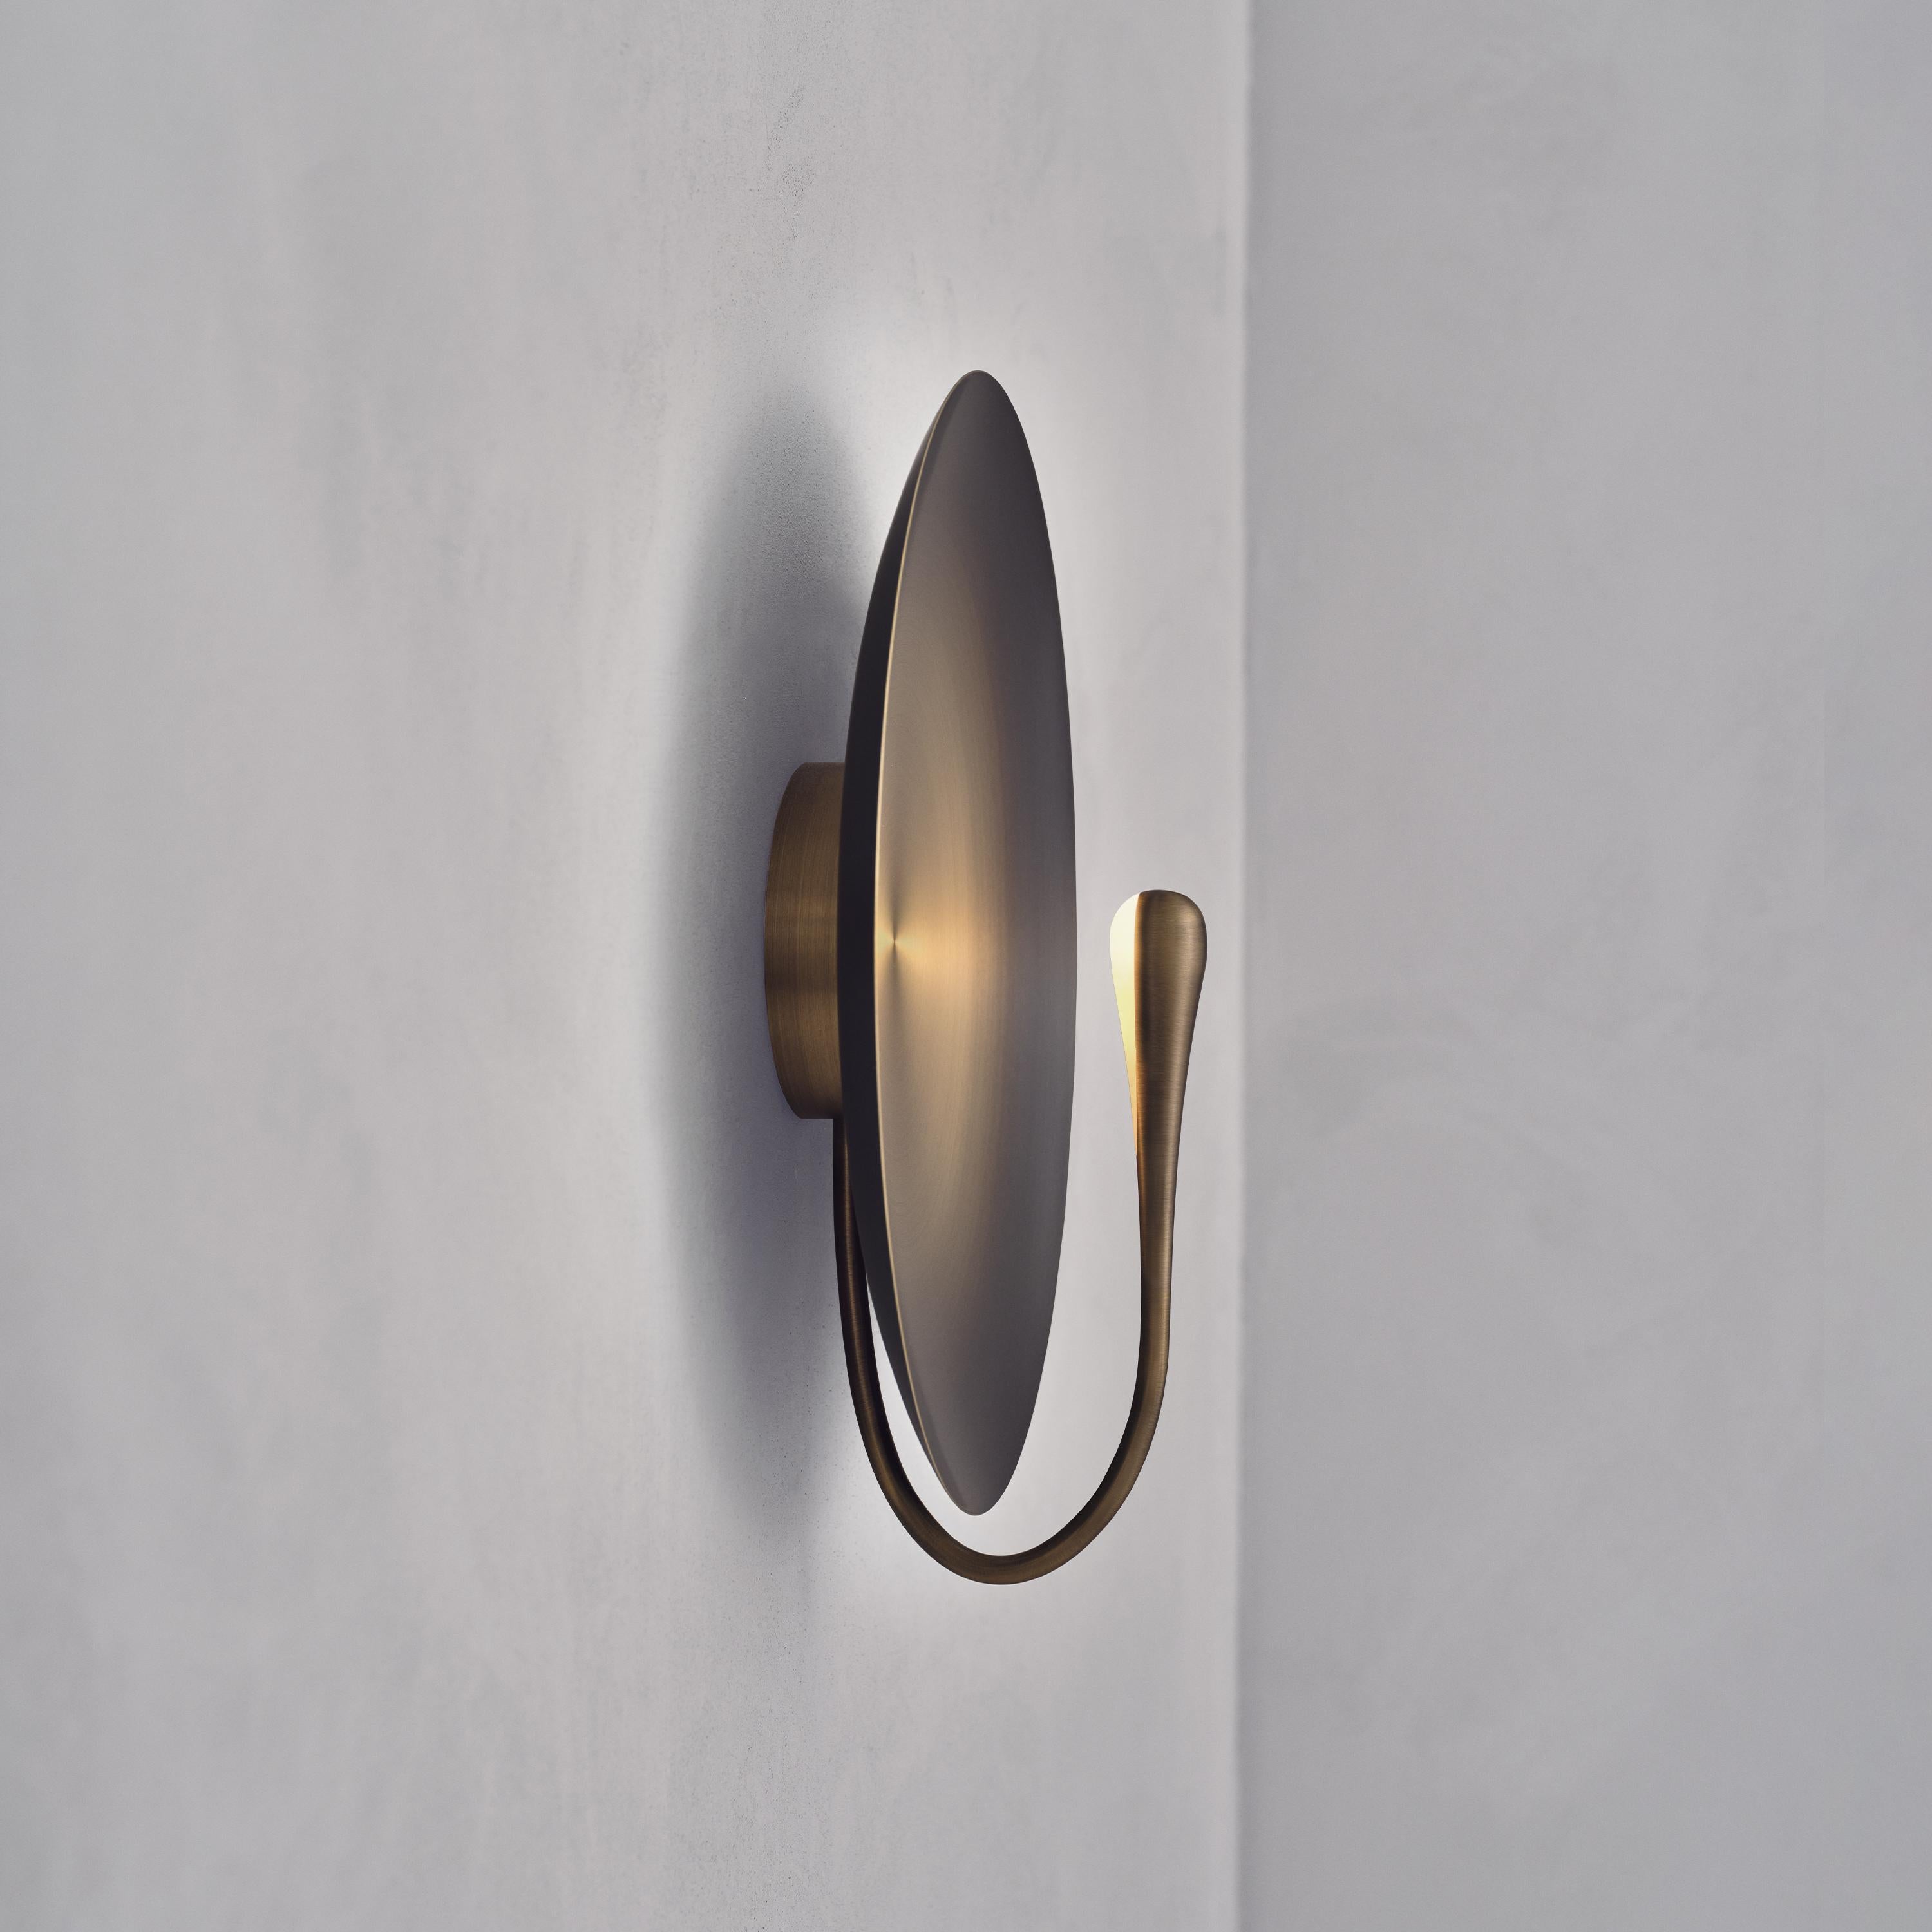 British 'Cosmic Ore' Gradient Patina Satin Brass Handmade Wall Light, Sconce For Sale